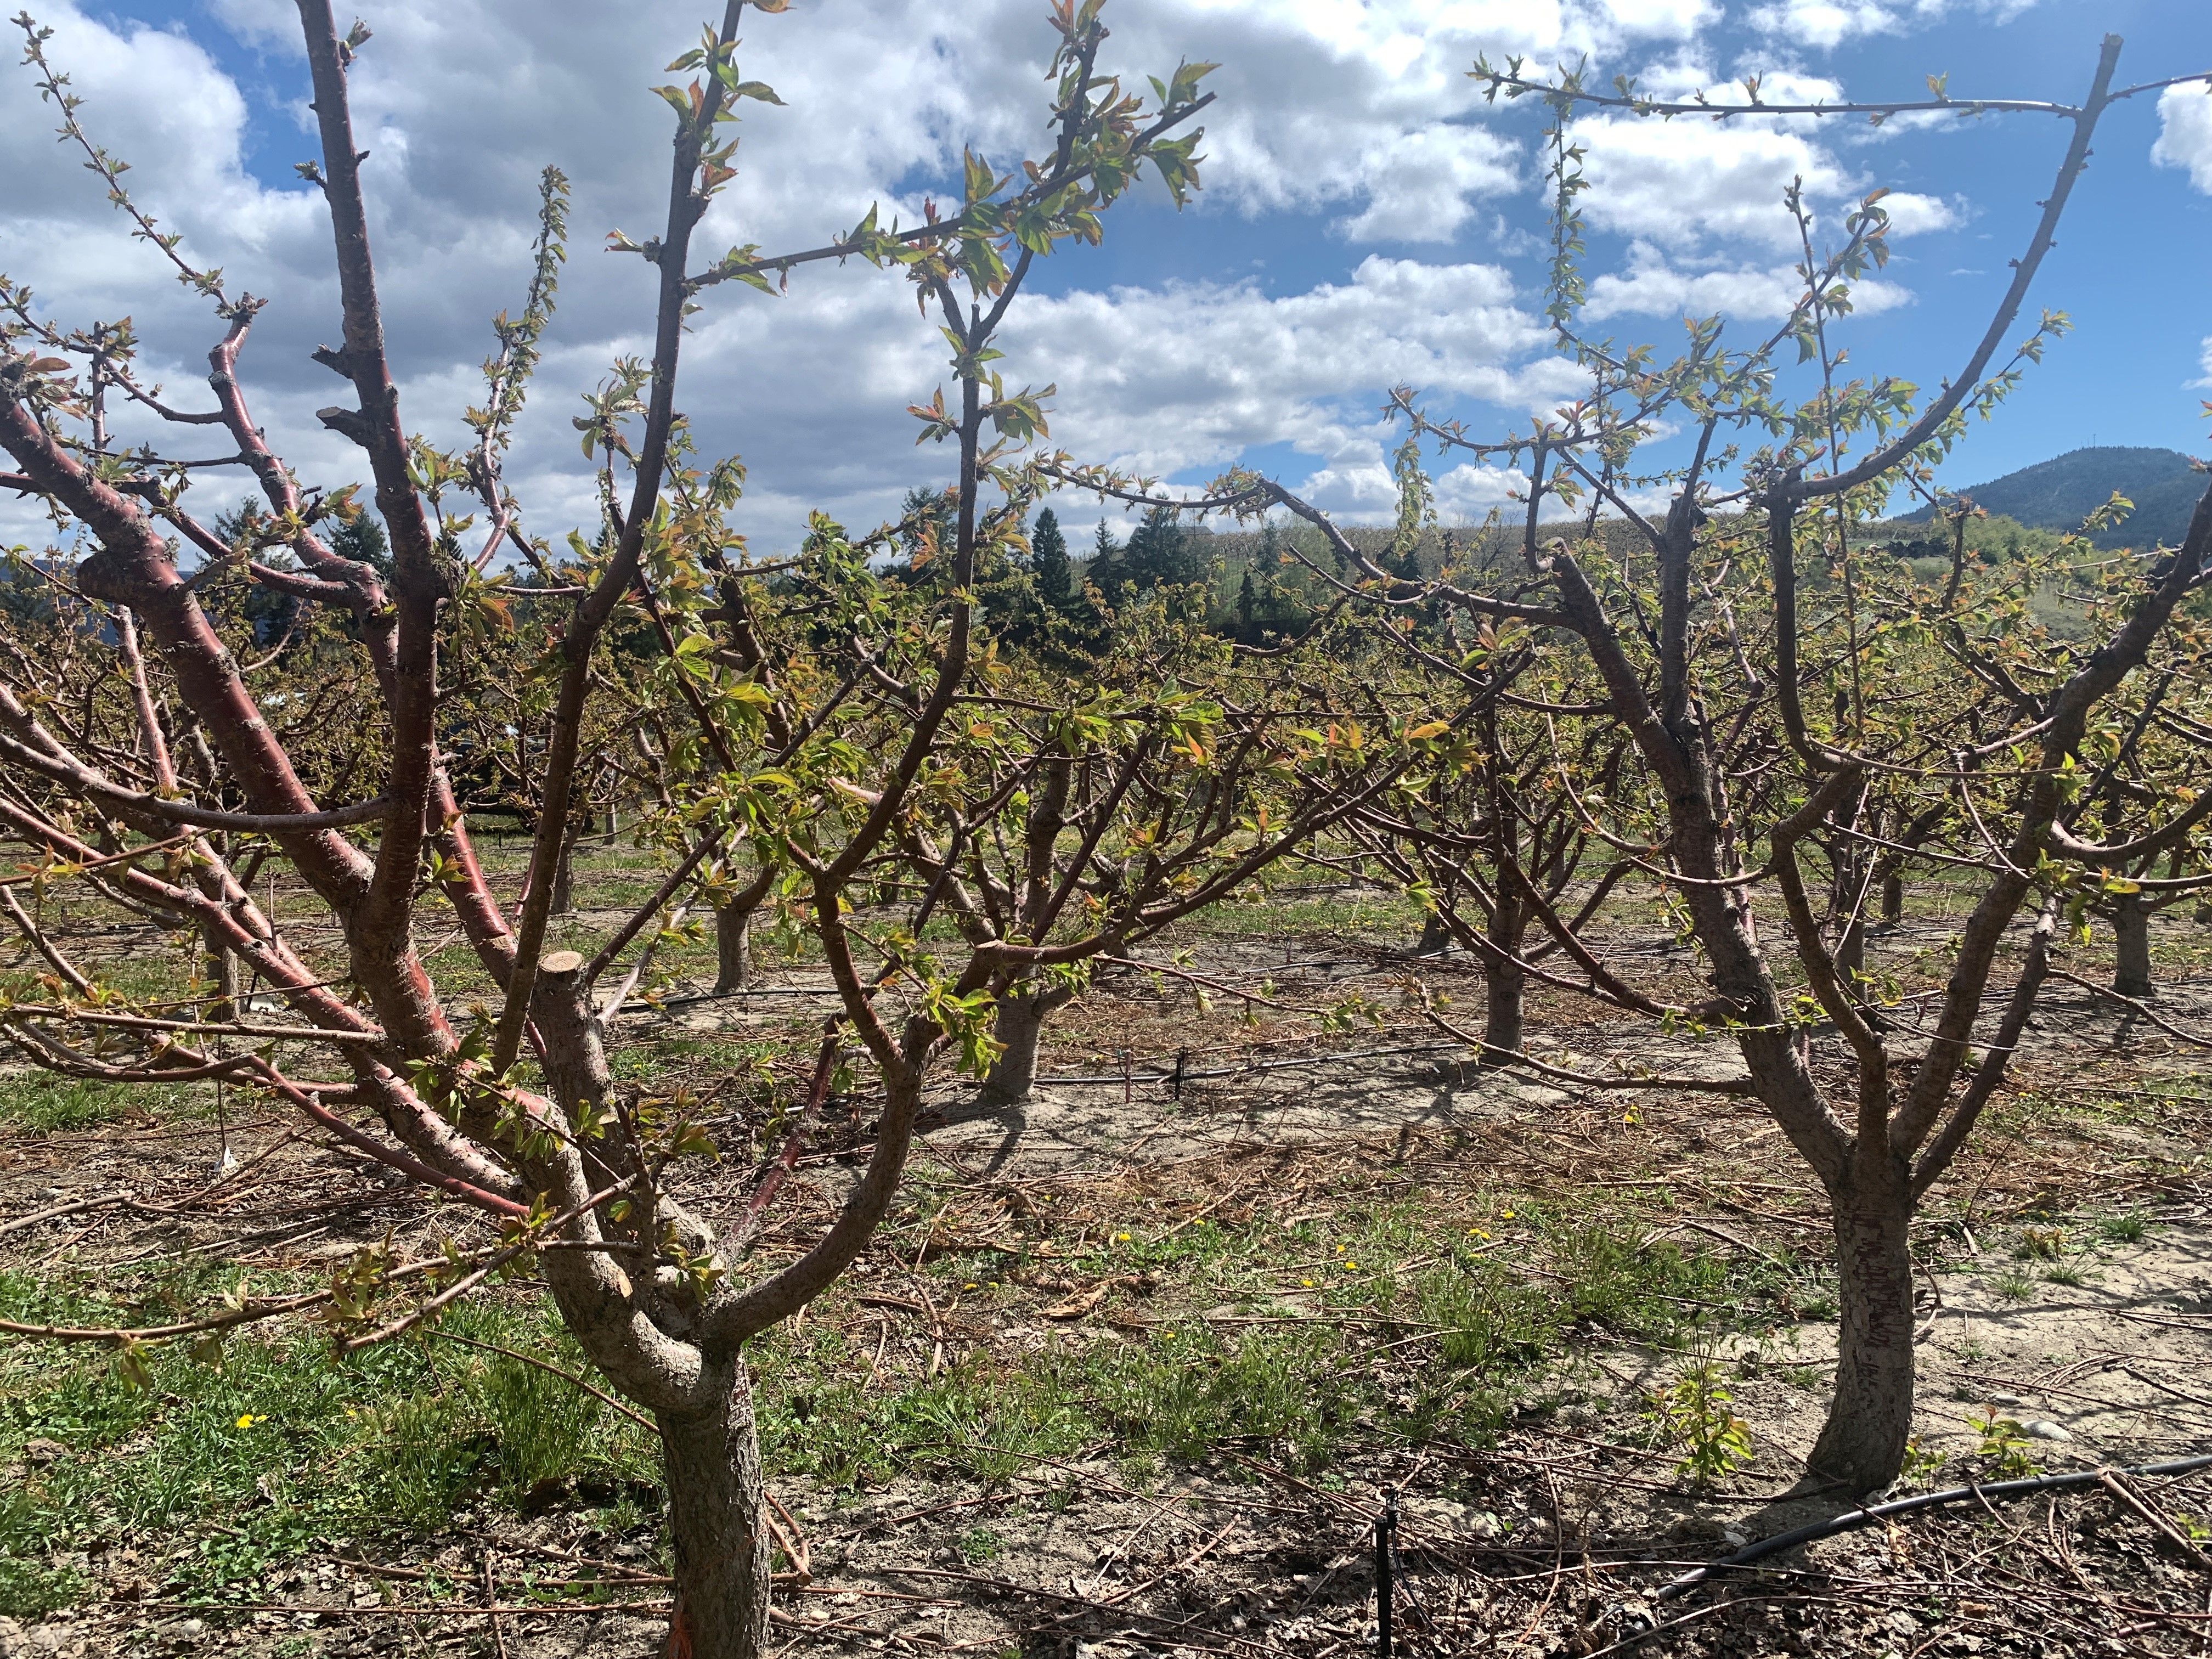 Extent of damage to Okanagan cherry buds revealed as blossom season arrives